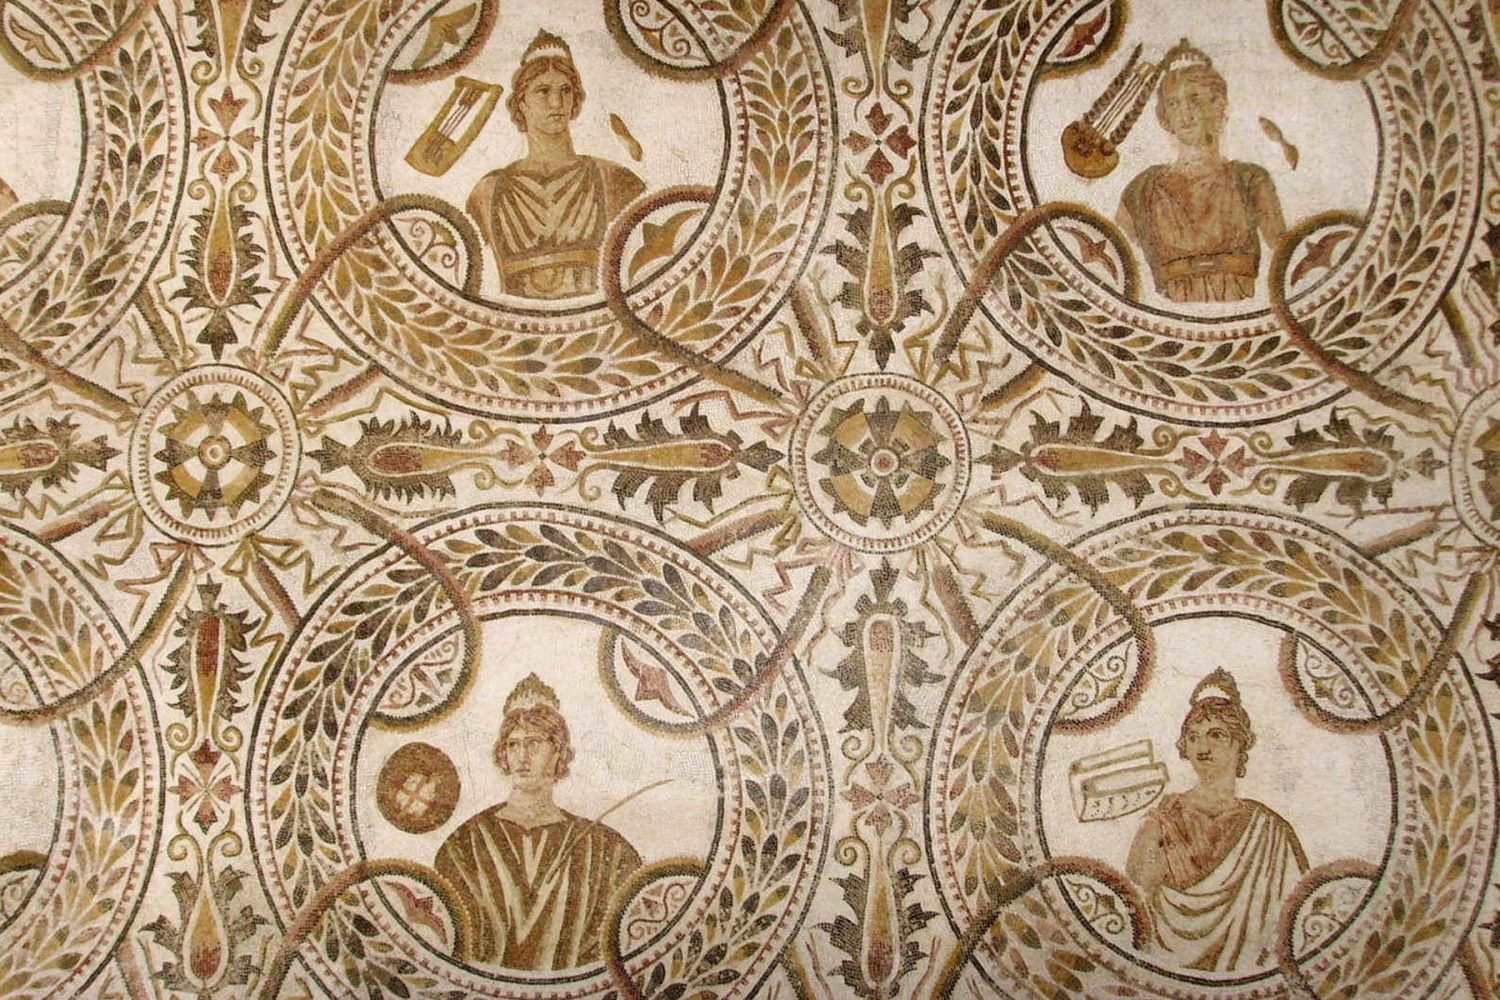 El Djem mosaic museum